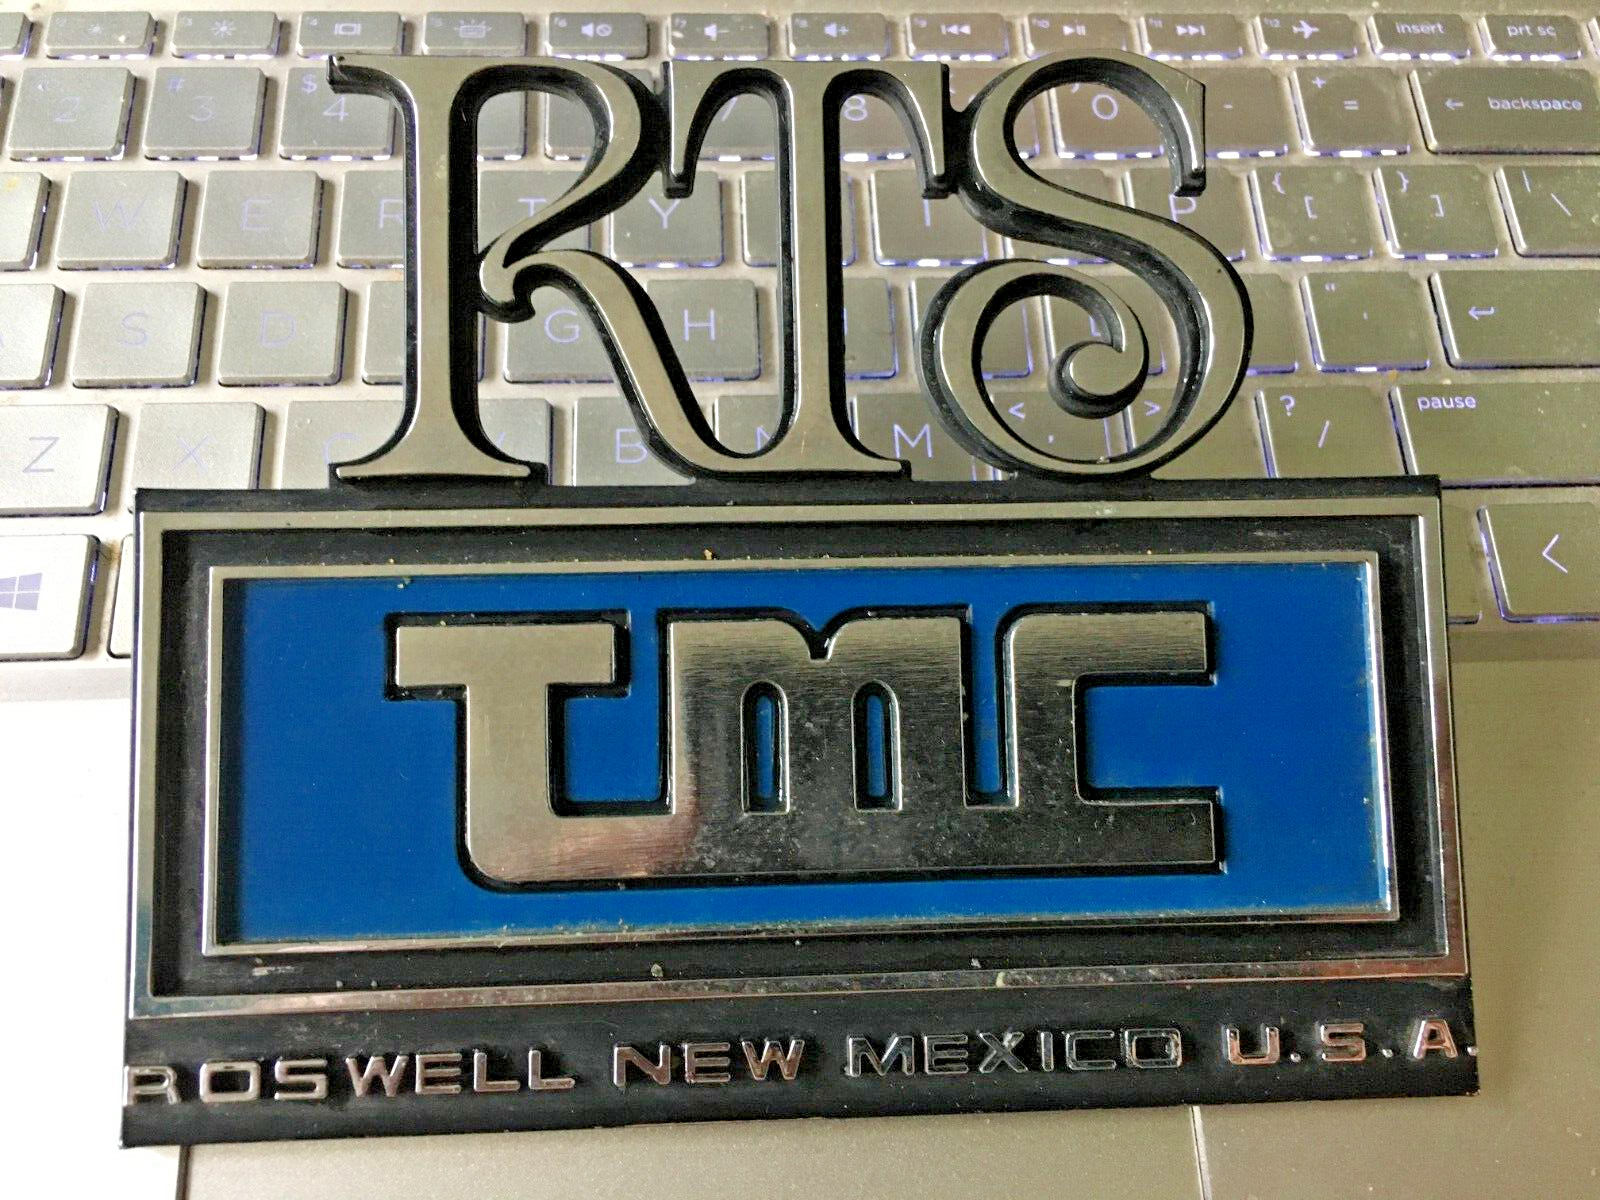 NYC MTA RTS/TMC BUS  name plate